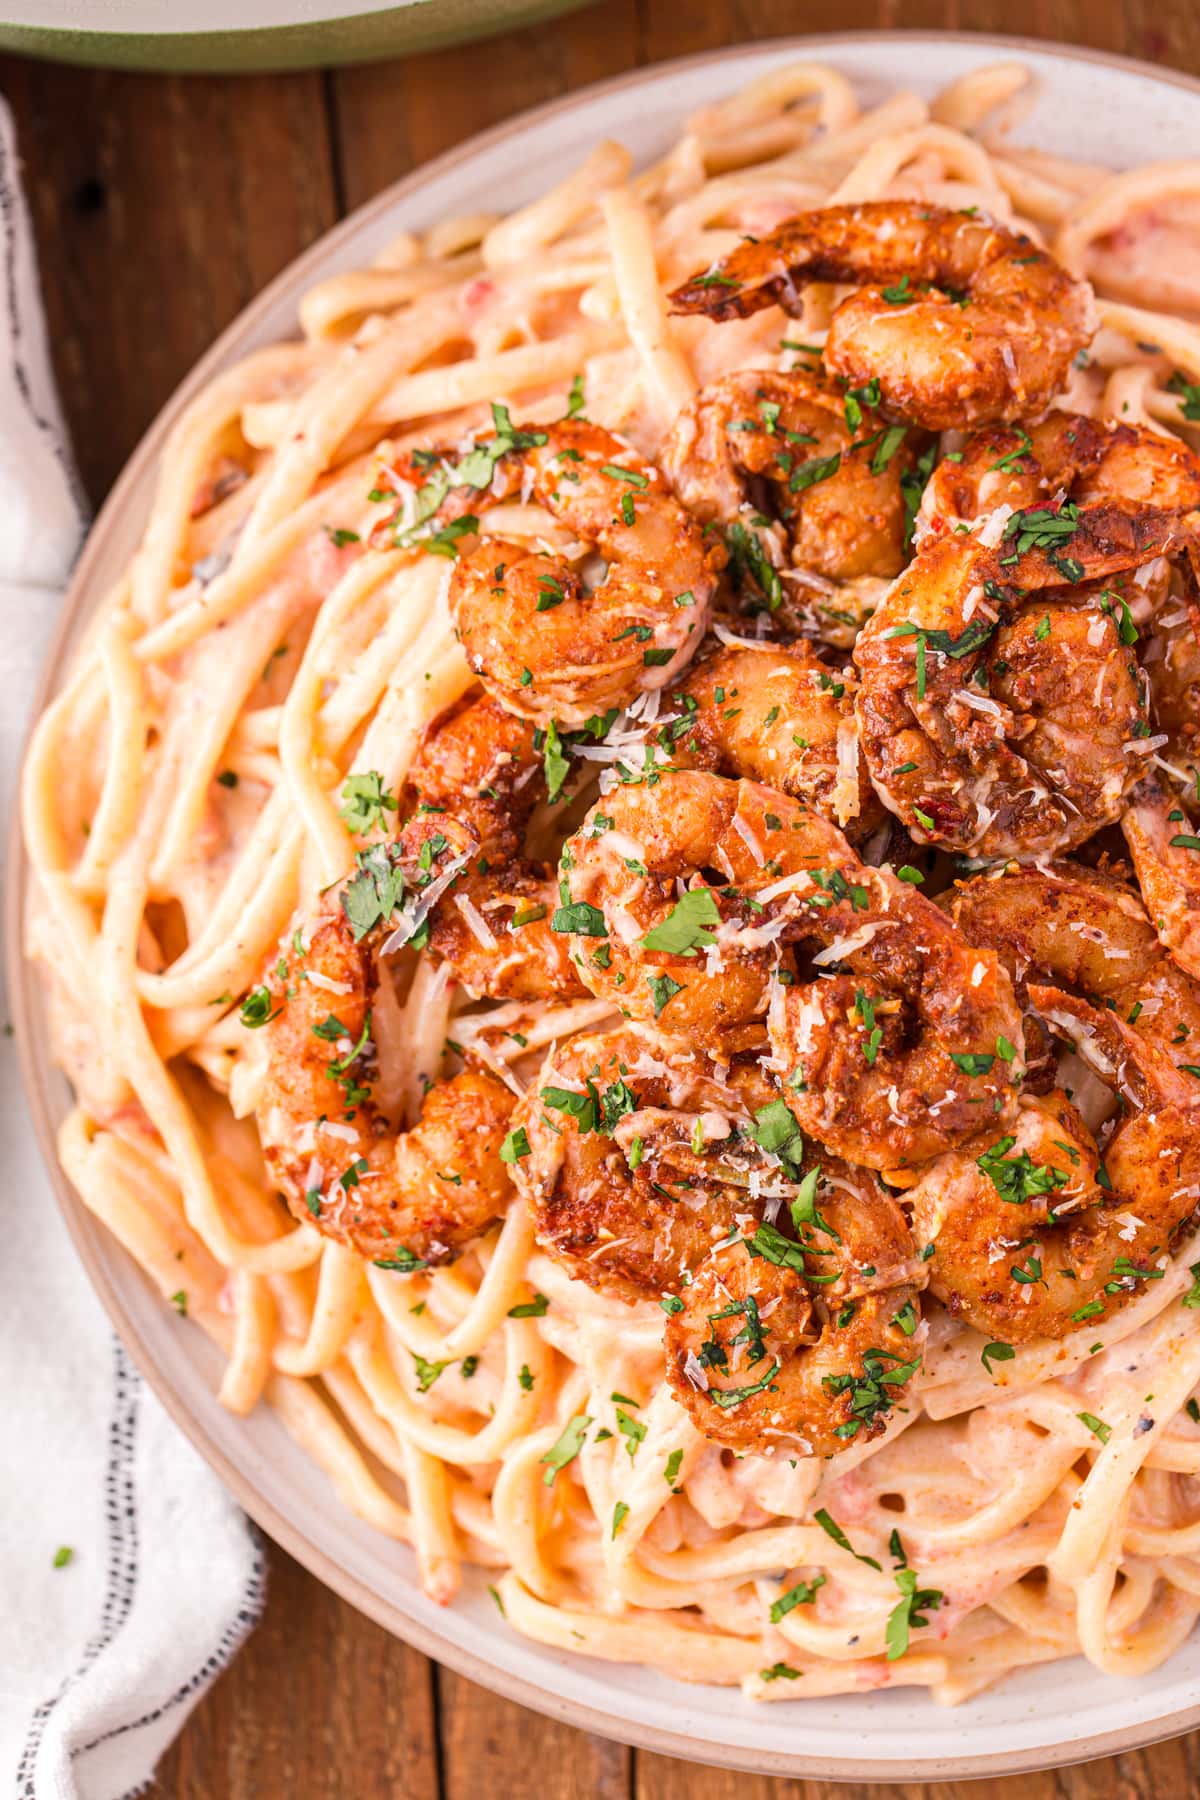 Overhead view of a plate of Cajun shrimp pasta